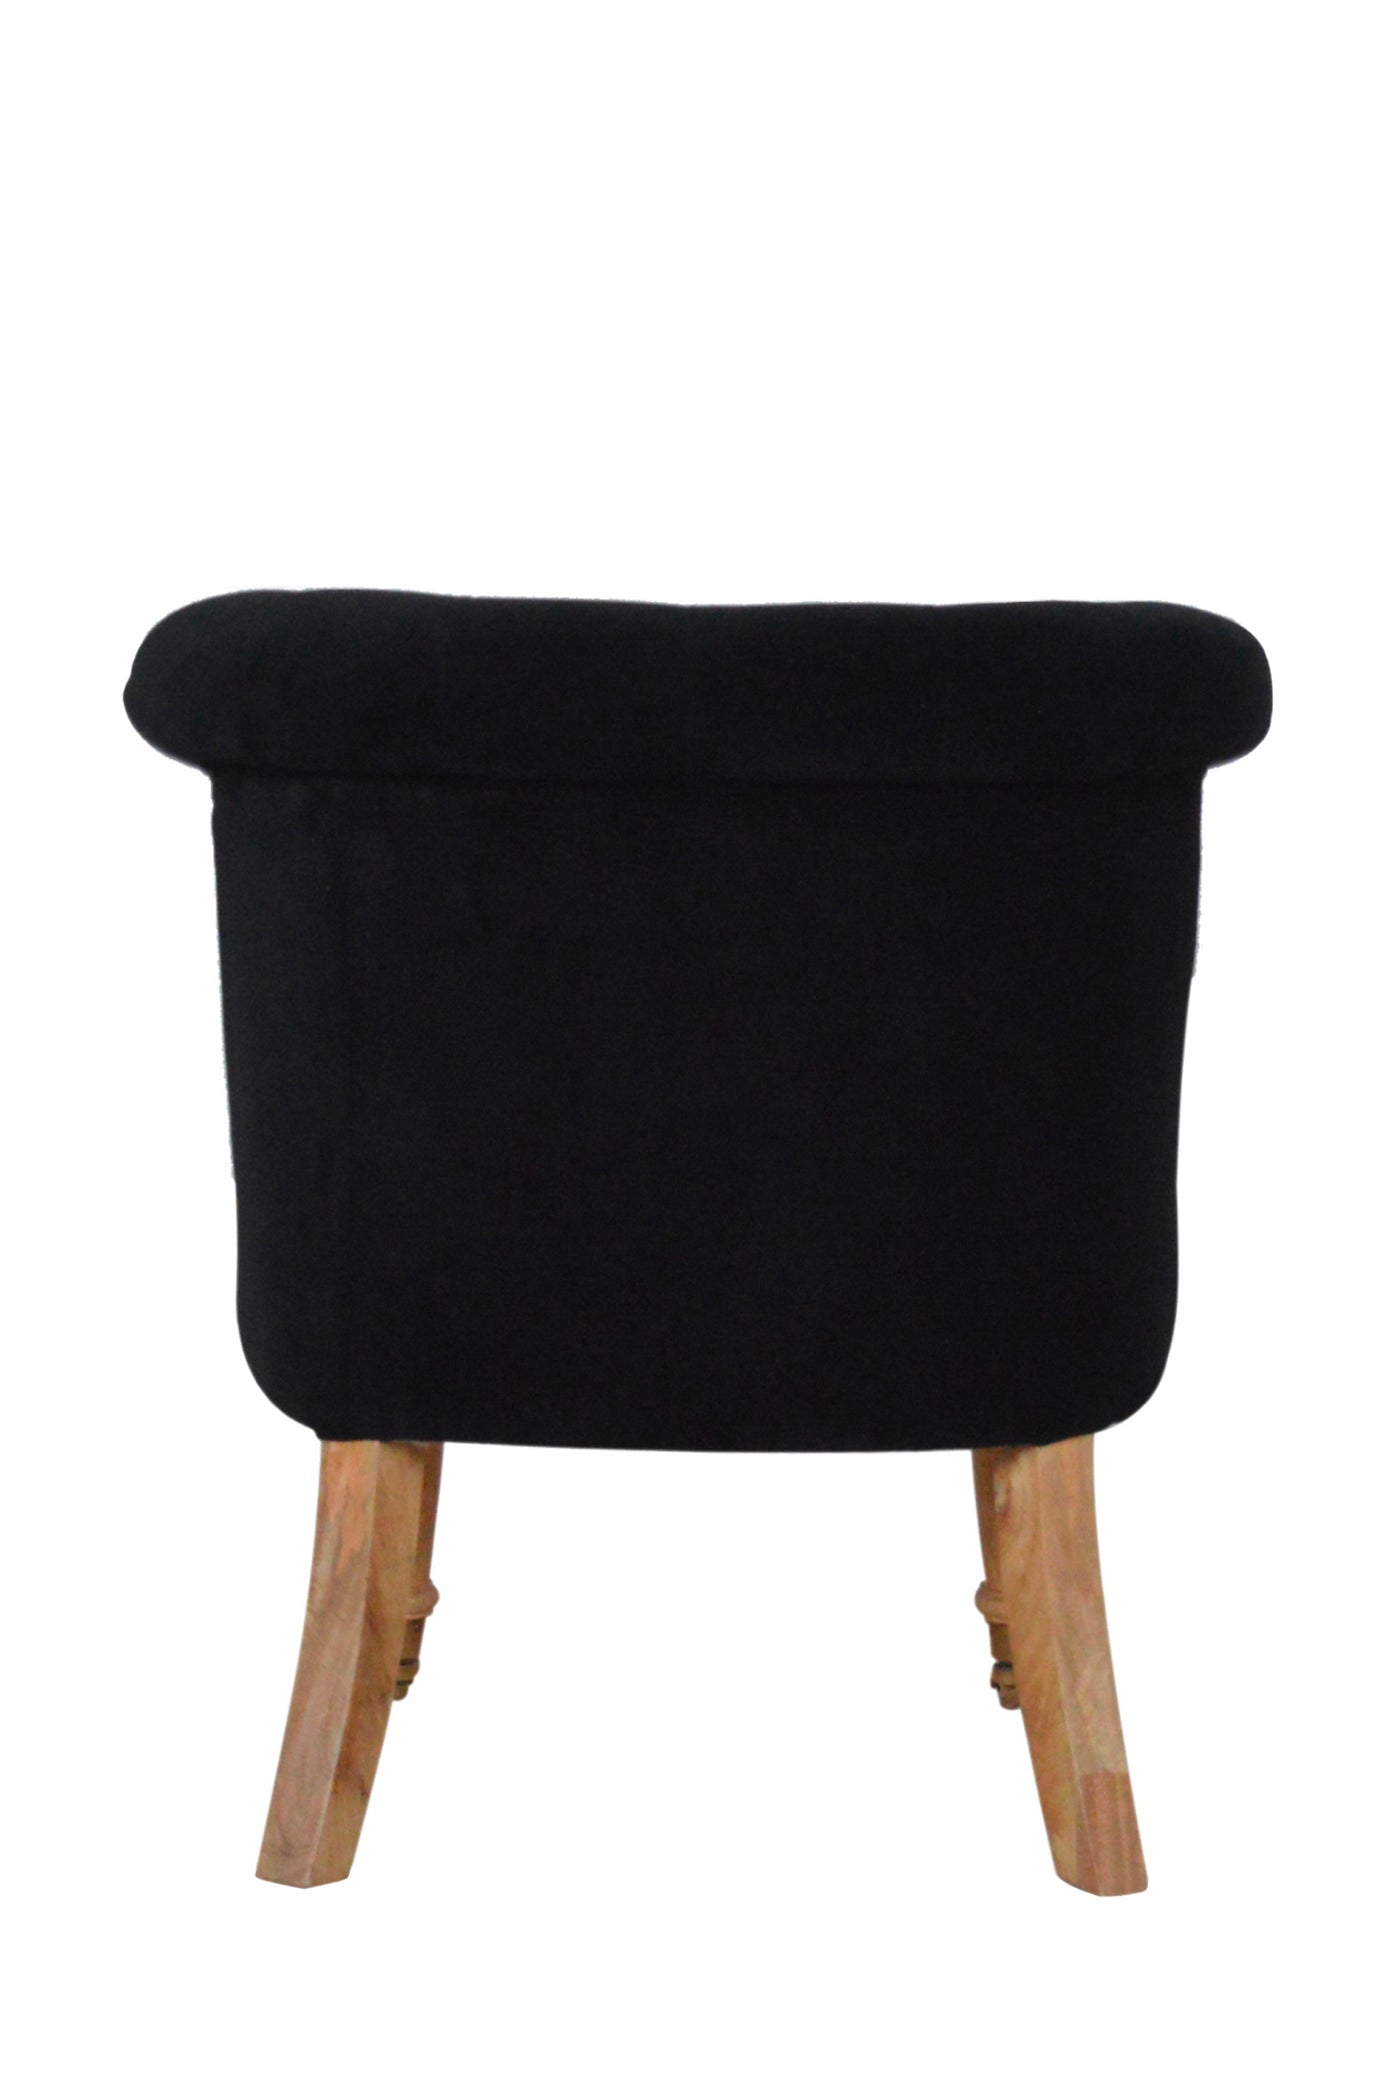 Pimlico - Chair Castors Black